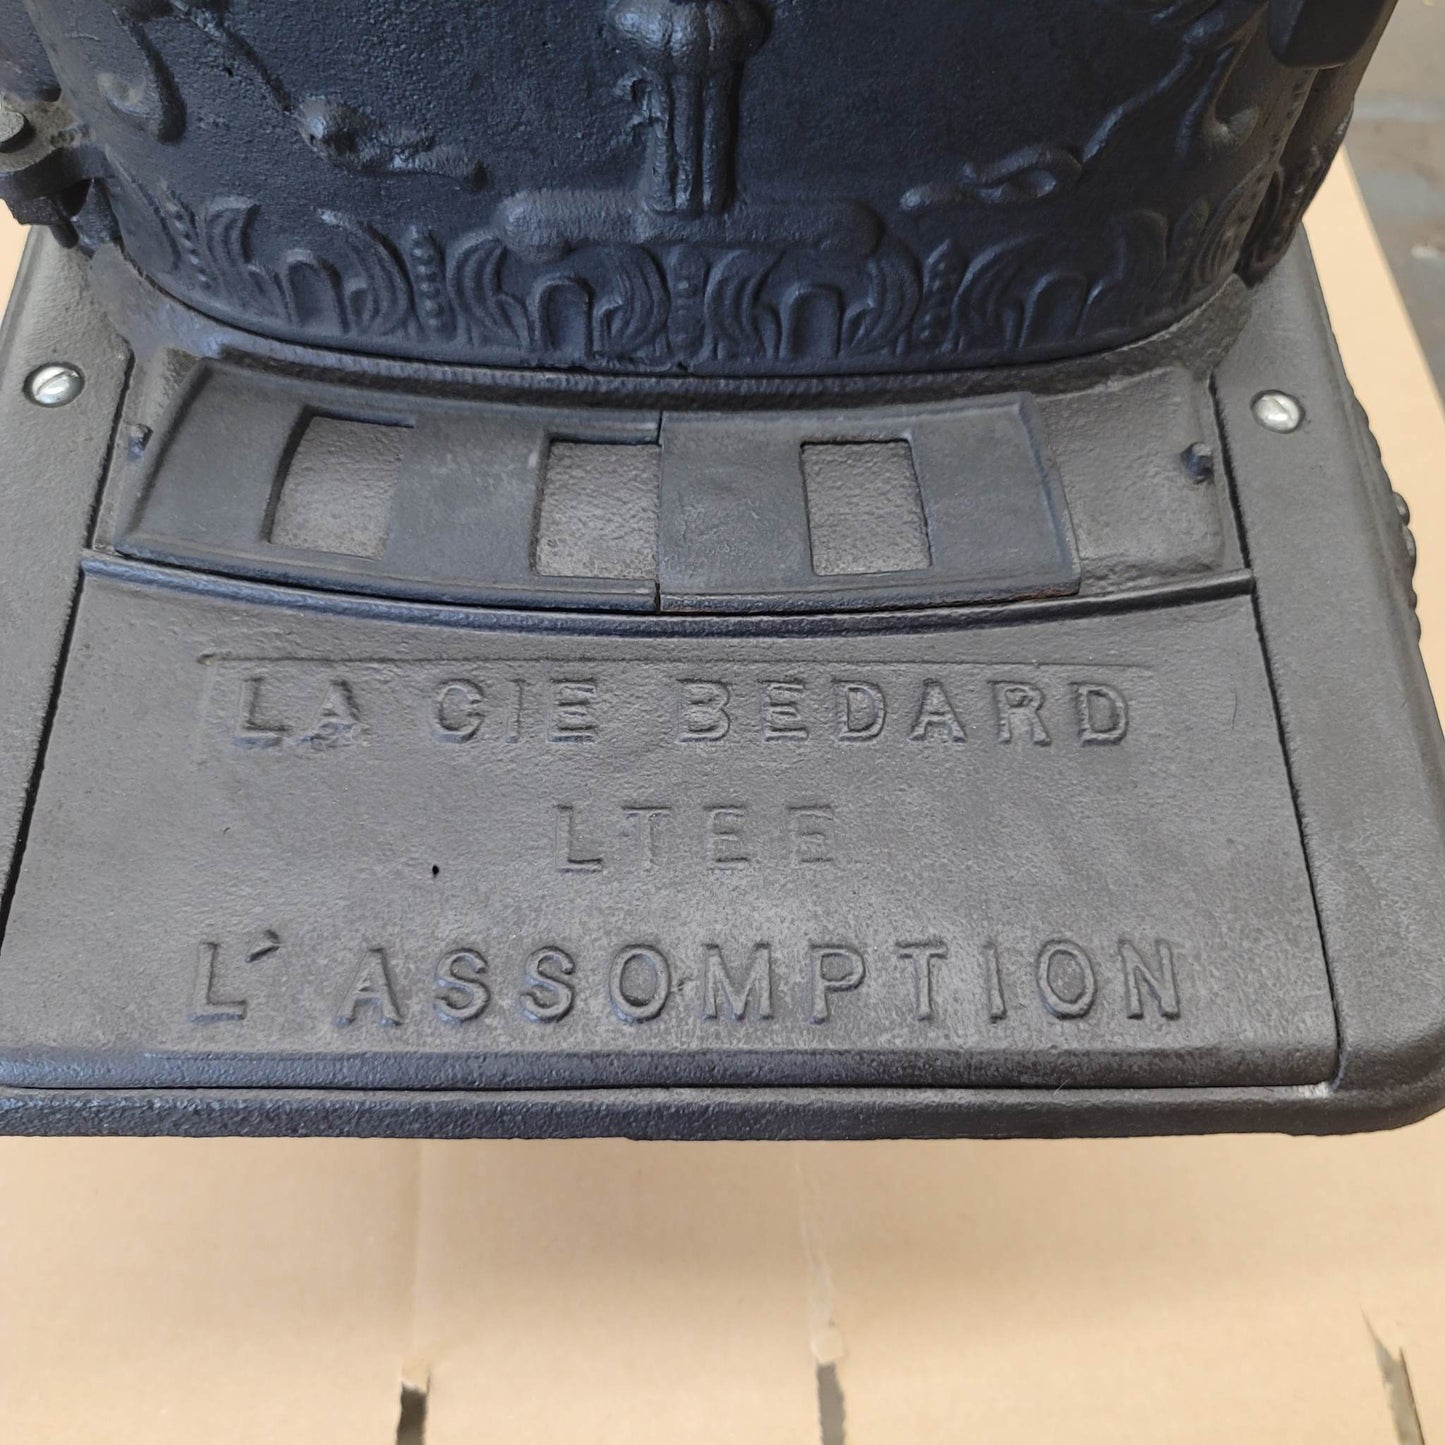 Rare Quebec Antique Box Stove La Cie Bedard